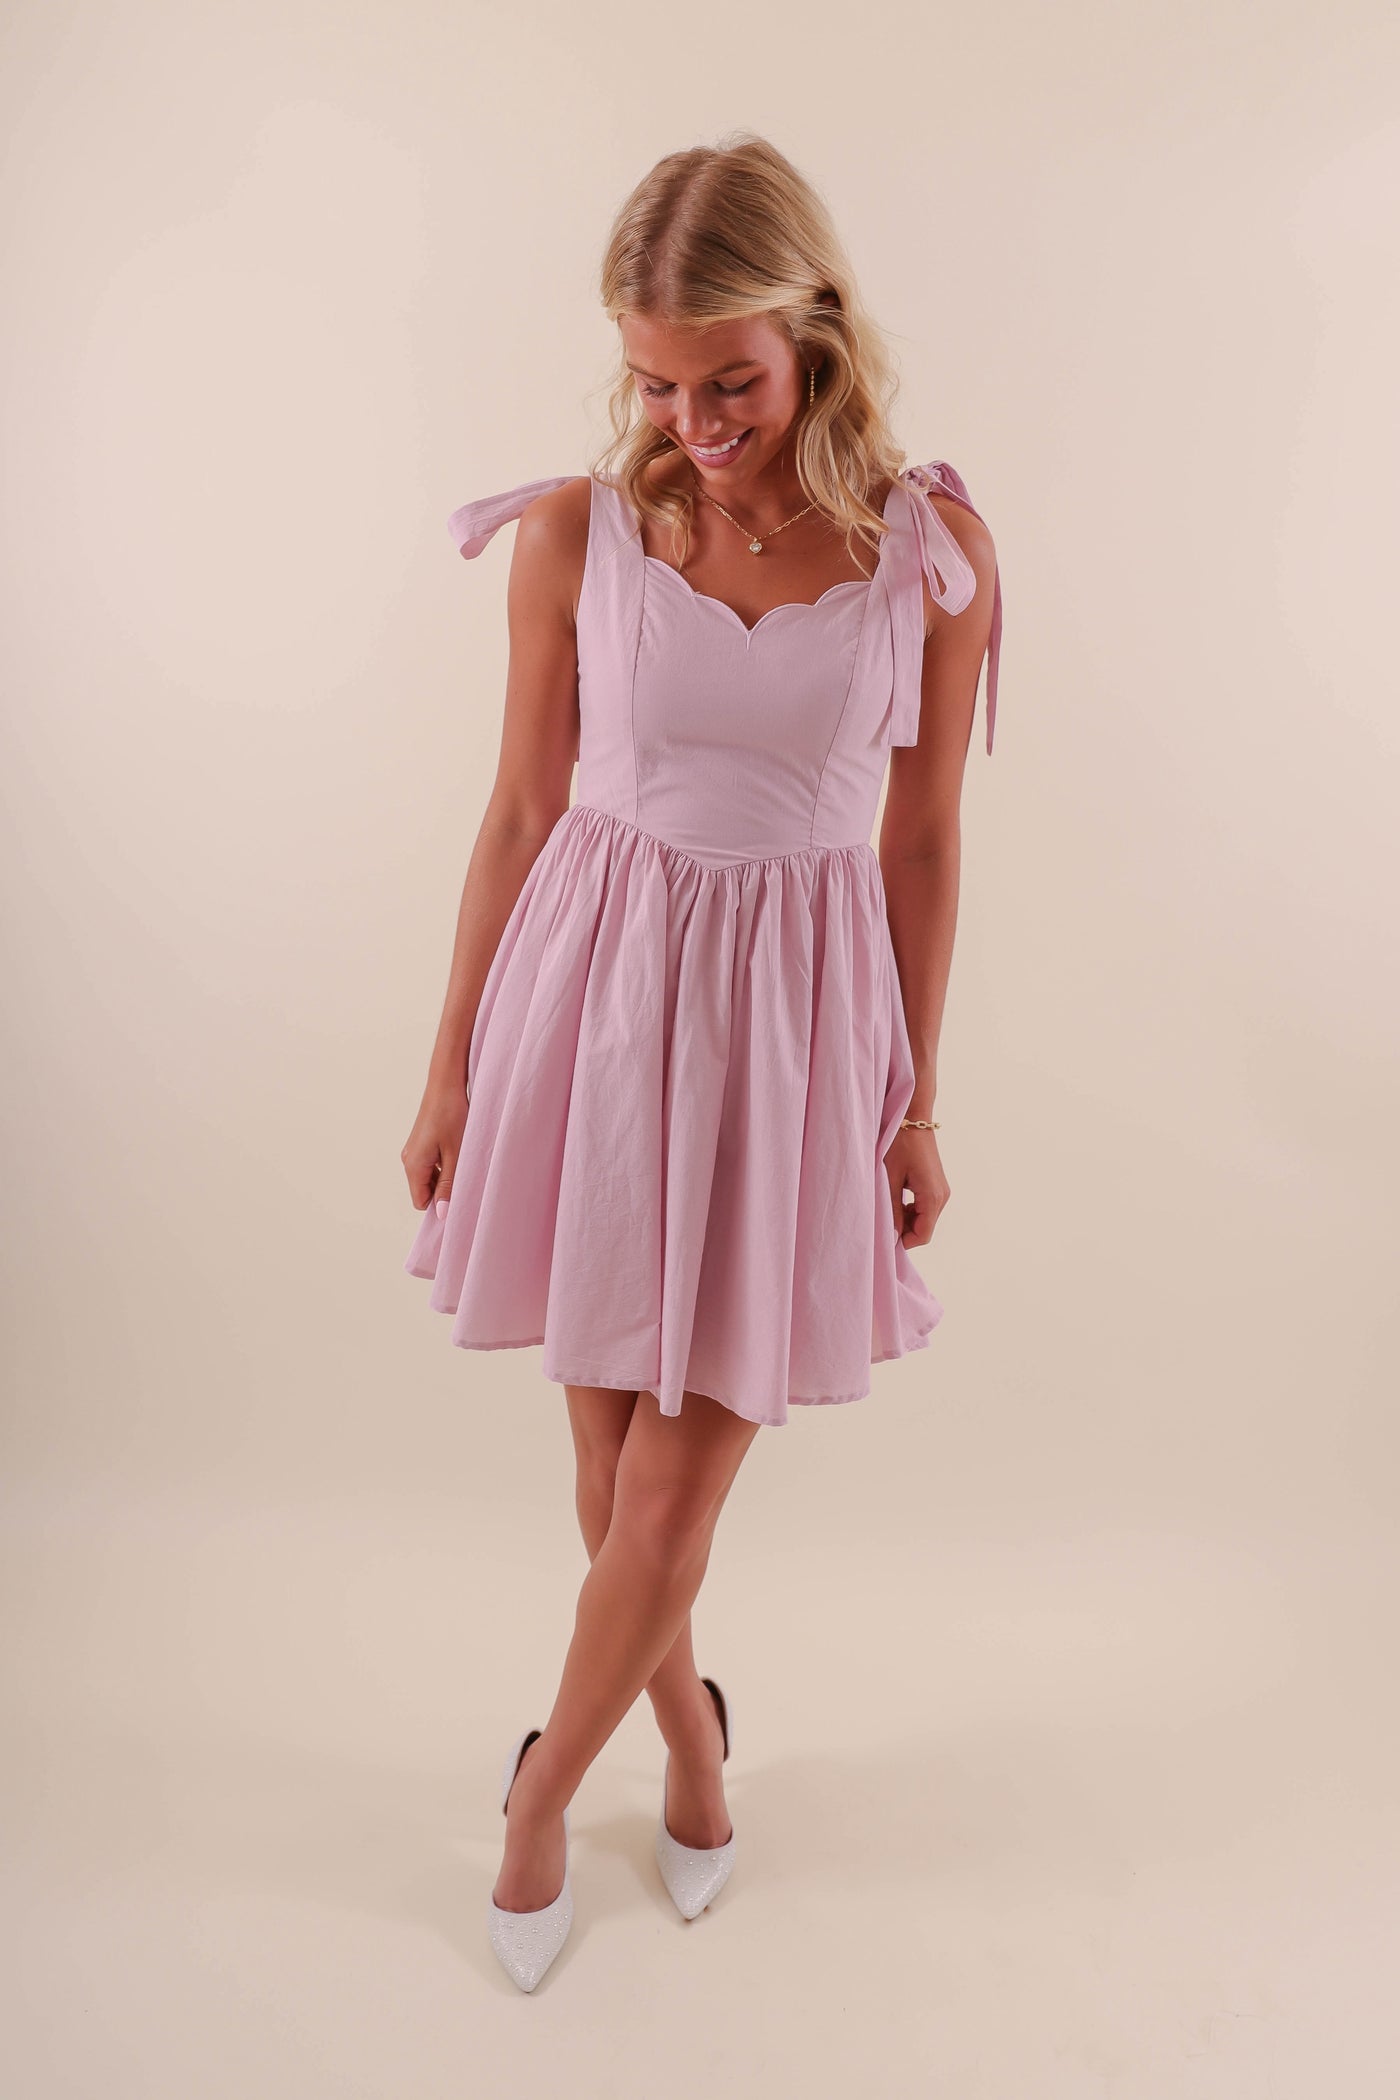 Women's Pink Scallop Mini Dress- Coquette Pink Mini Dress- Mable Scallop Dress